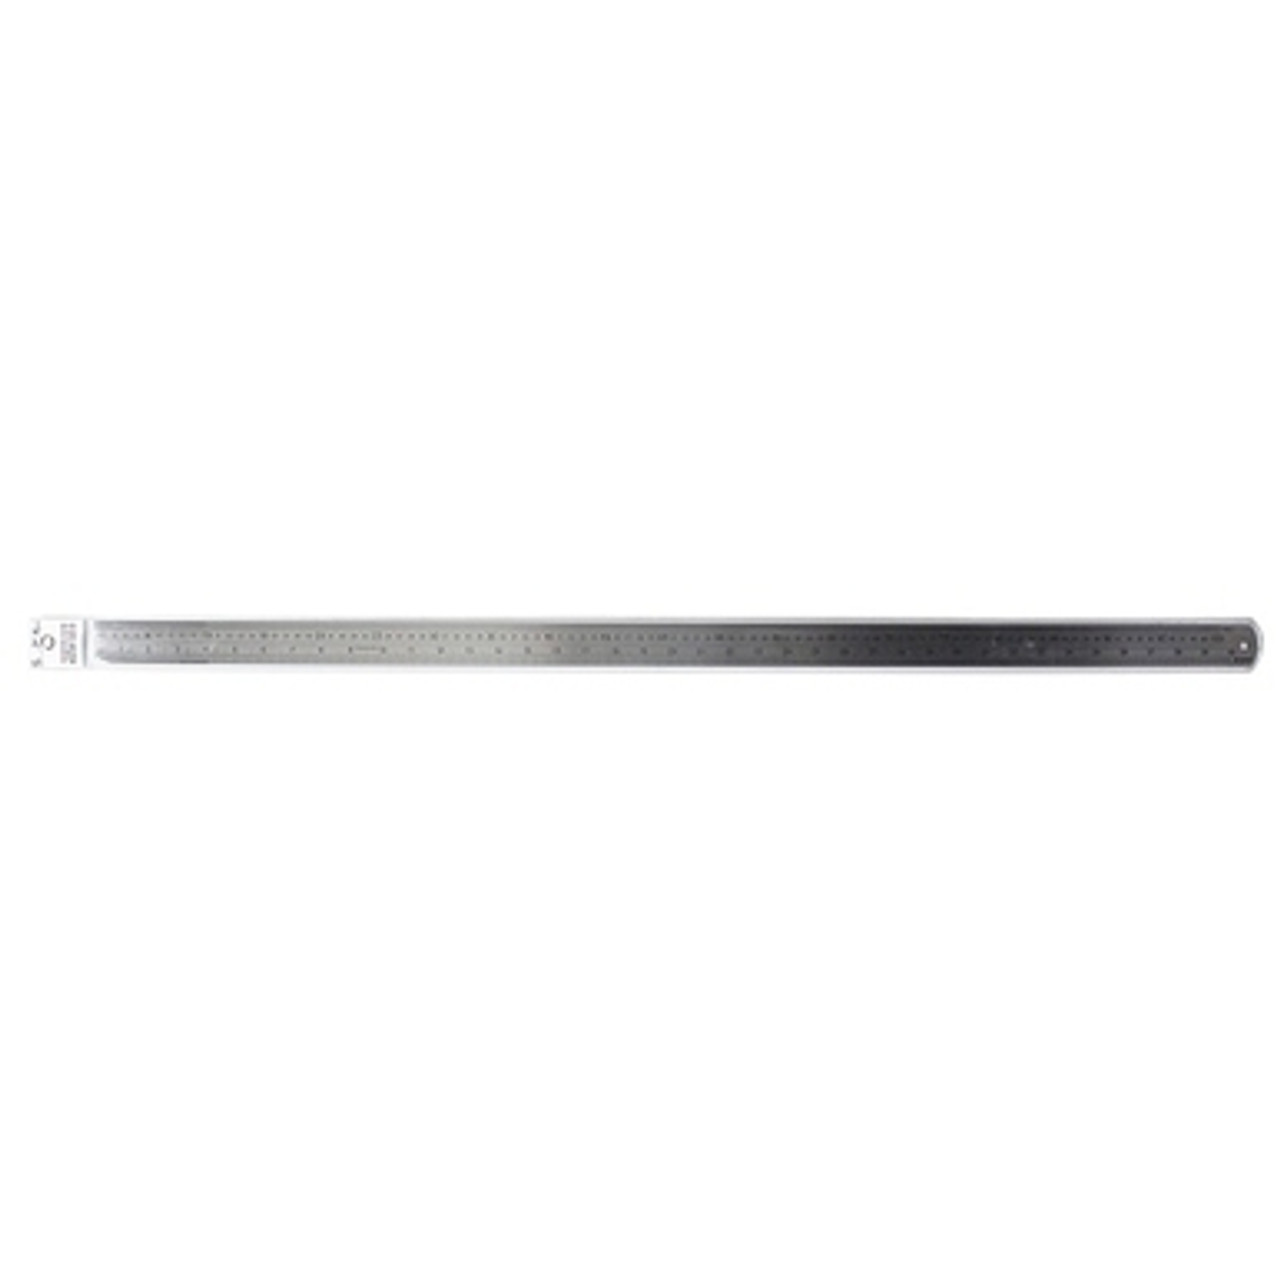 Steel Ruler - 1m